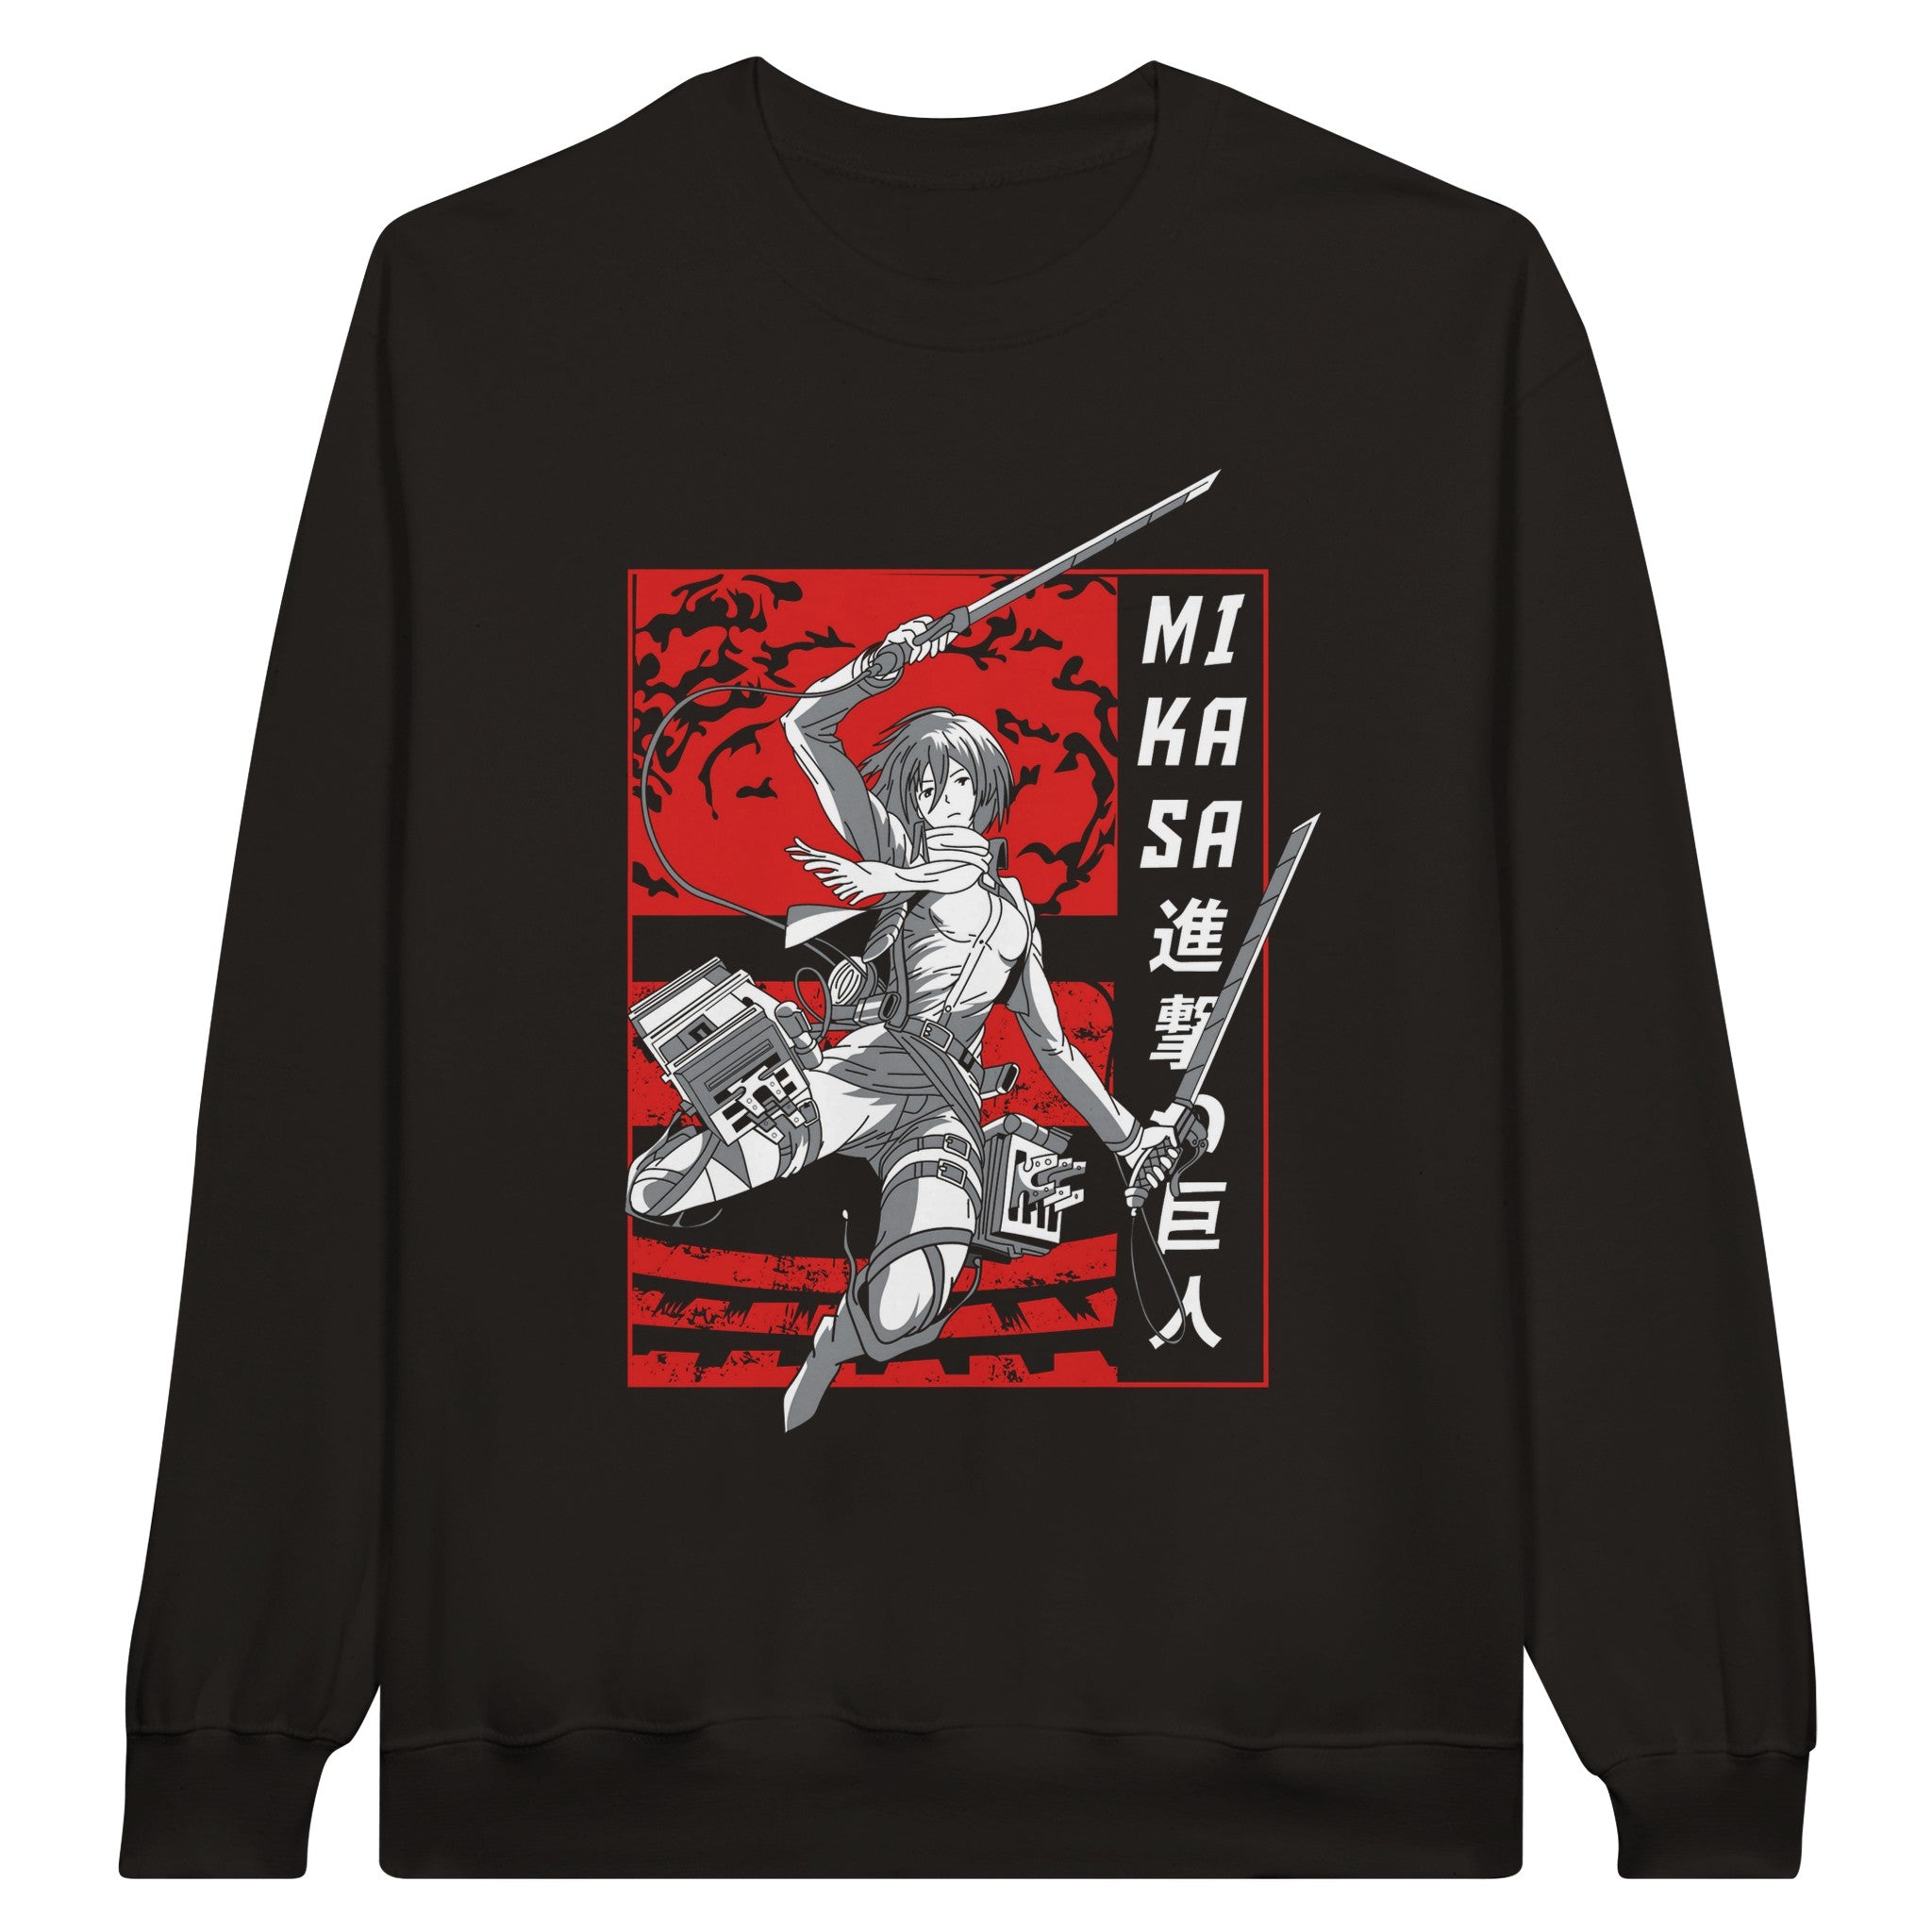 shop and buy attack on titan anime clothing mikasa sweatshirt/longsleeve/jumper